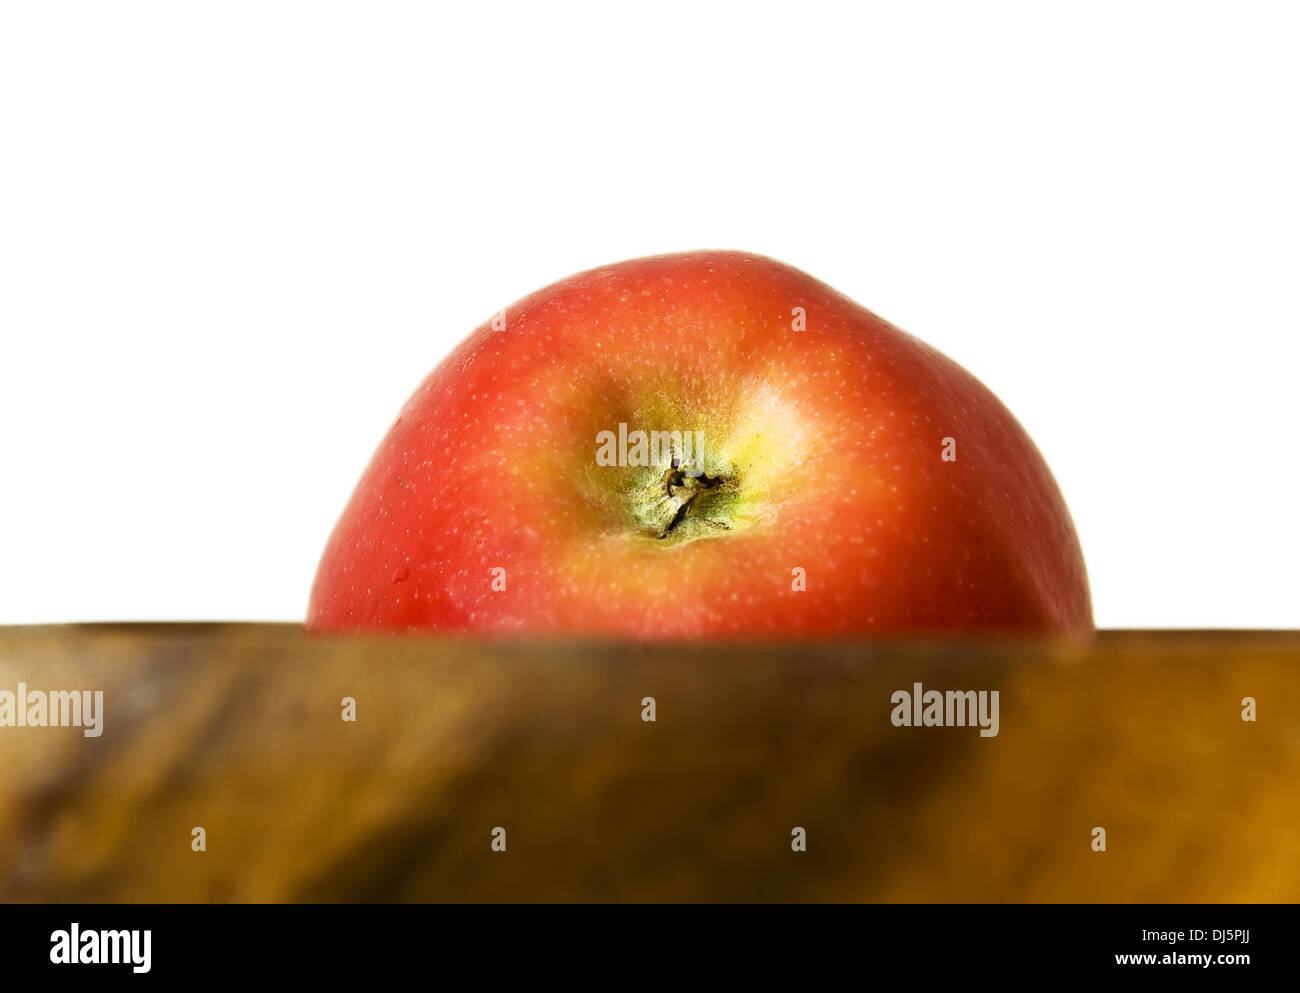 red apple Stock Photo